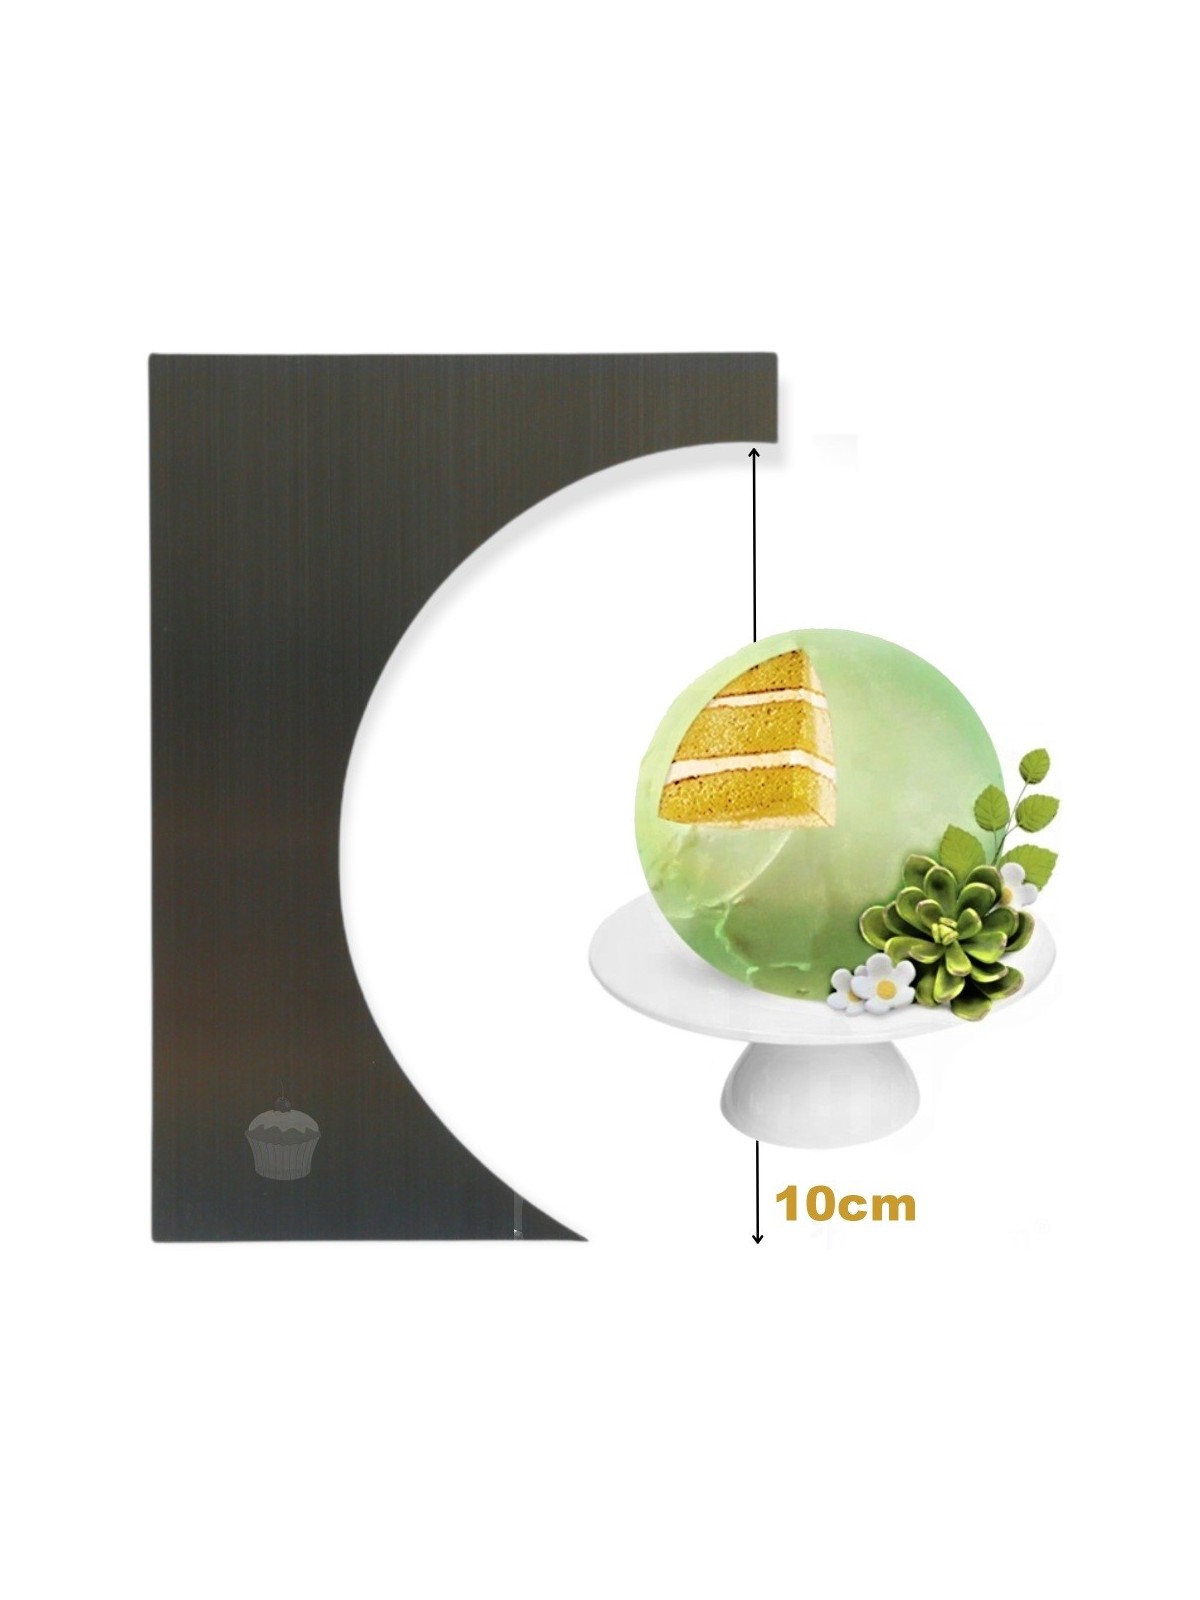 CAKE CRAFT STAINLESS STEEL SCRAPER - ball 16cm